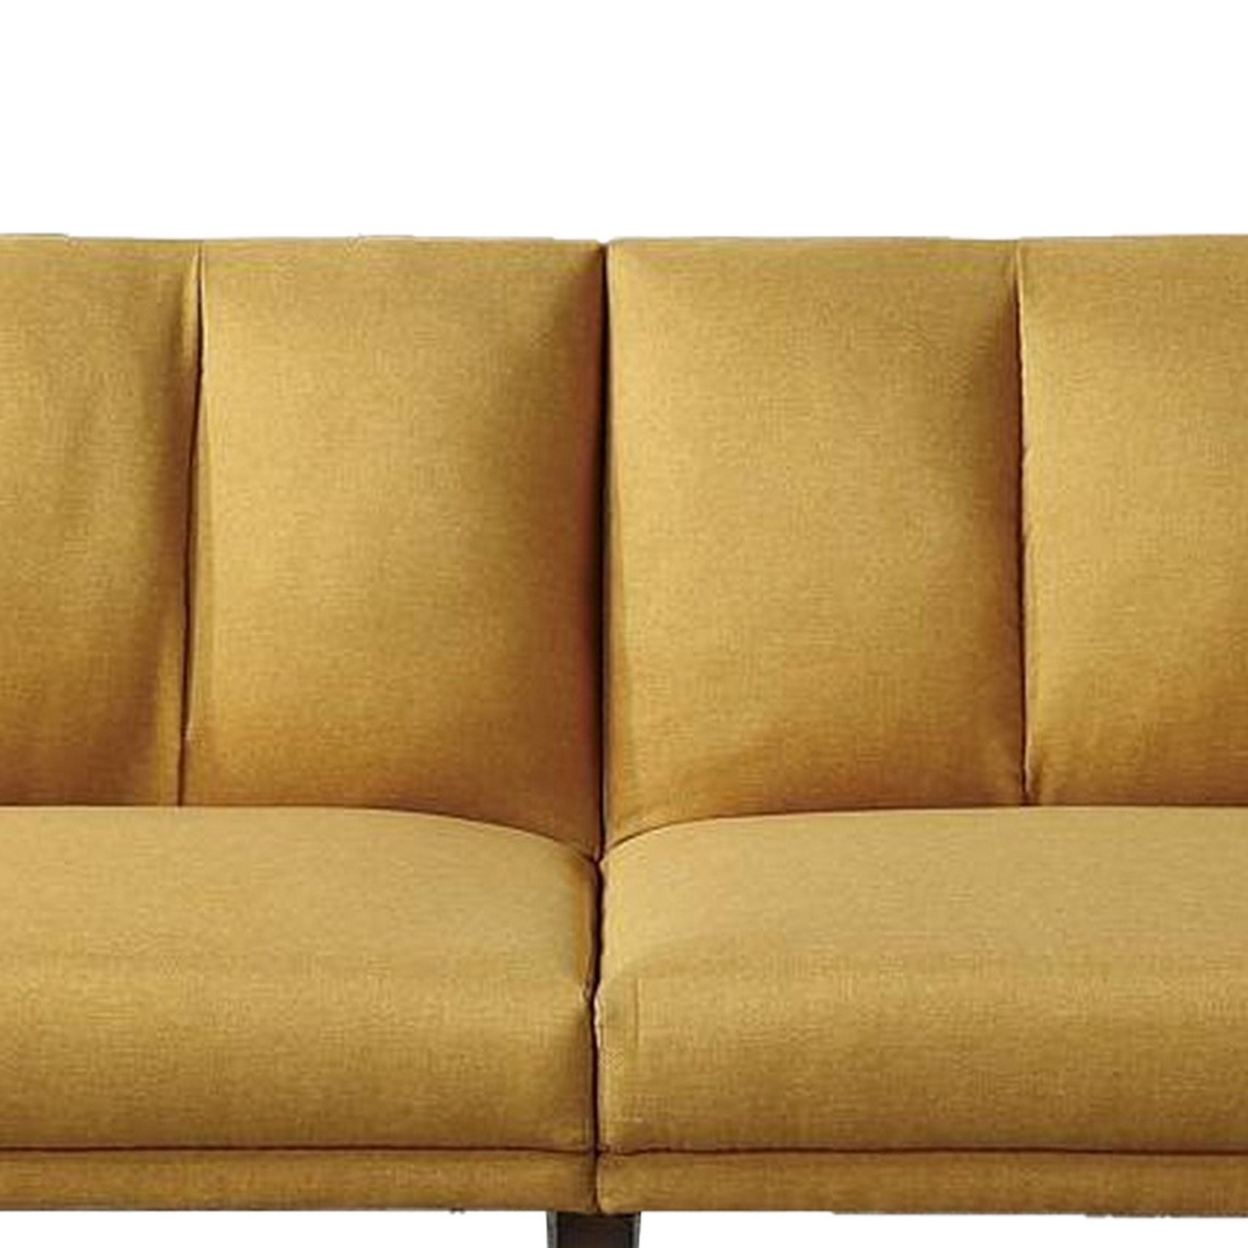 Adjustable Upholstered Sofa With Track Armrests And Angled Legs, Yellow- Saltoro Sherpi